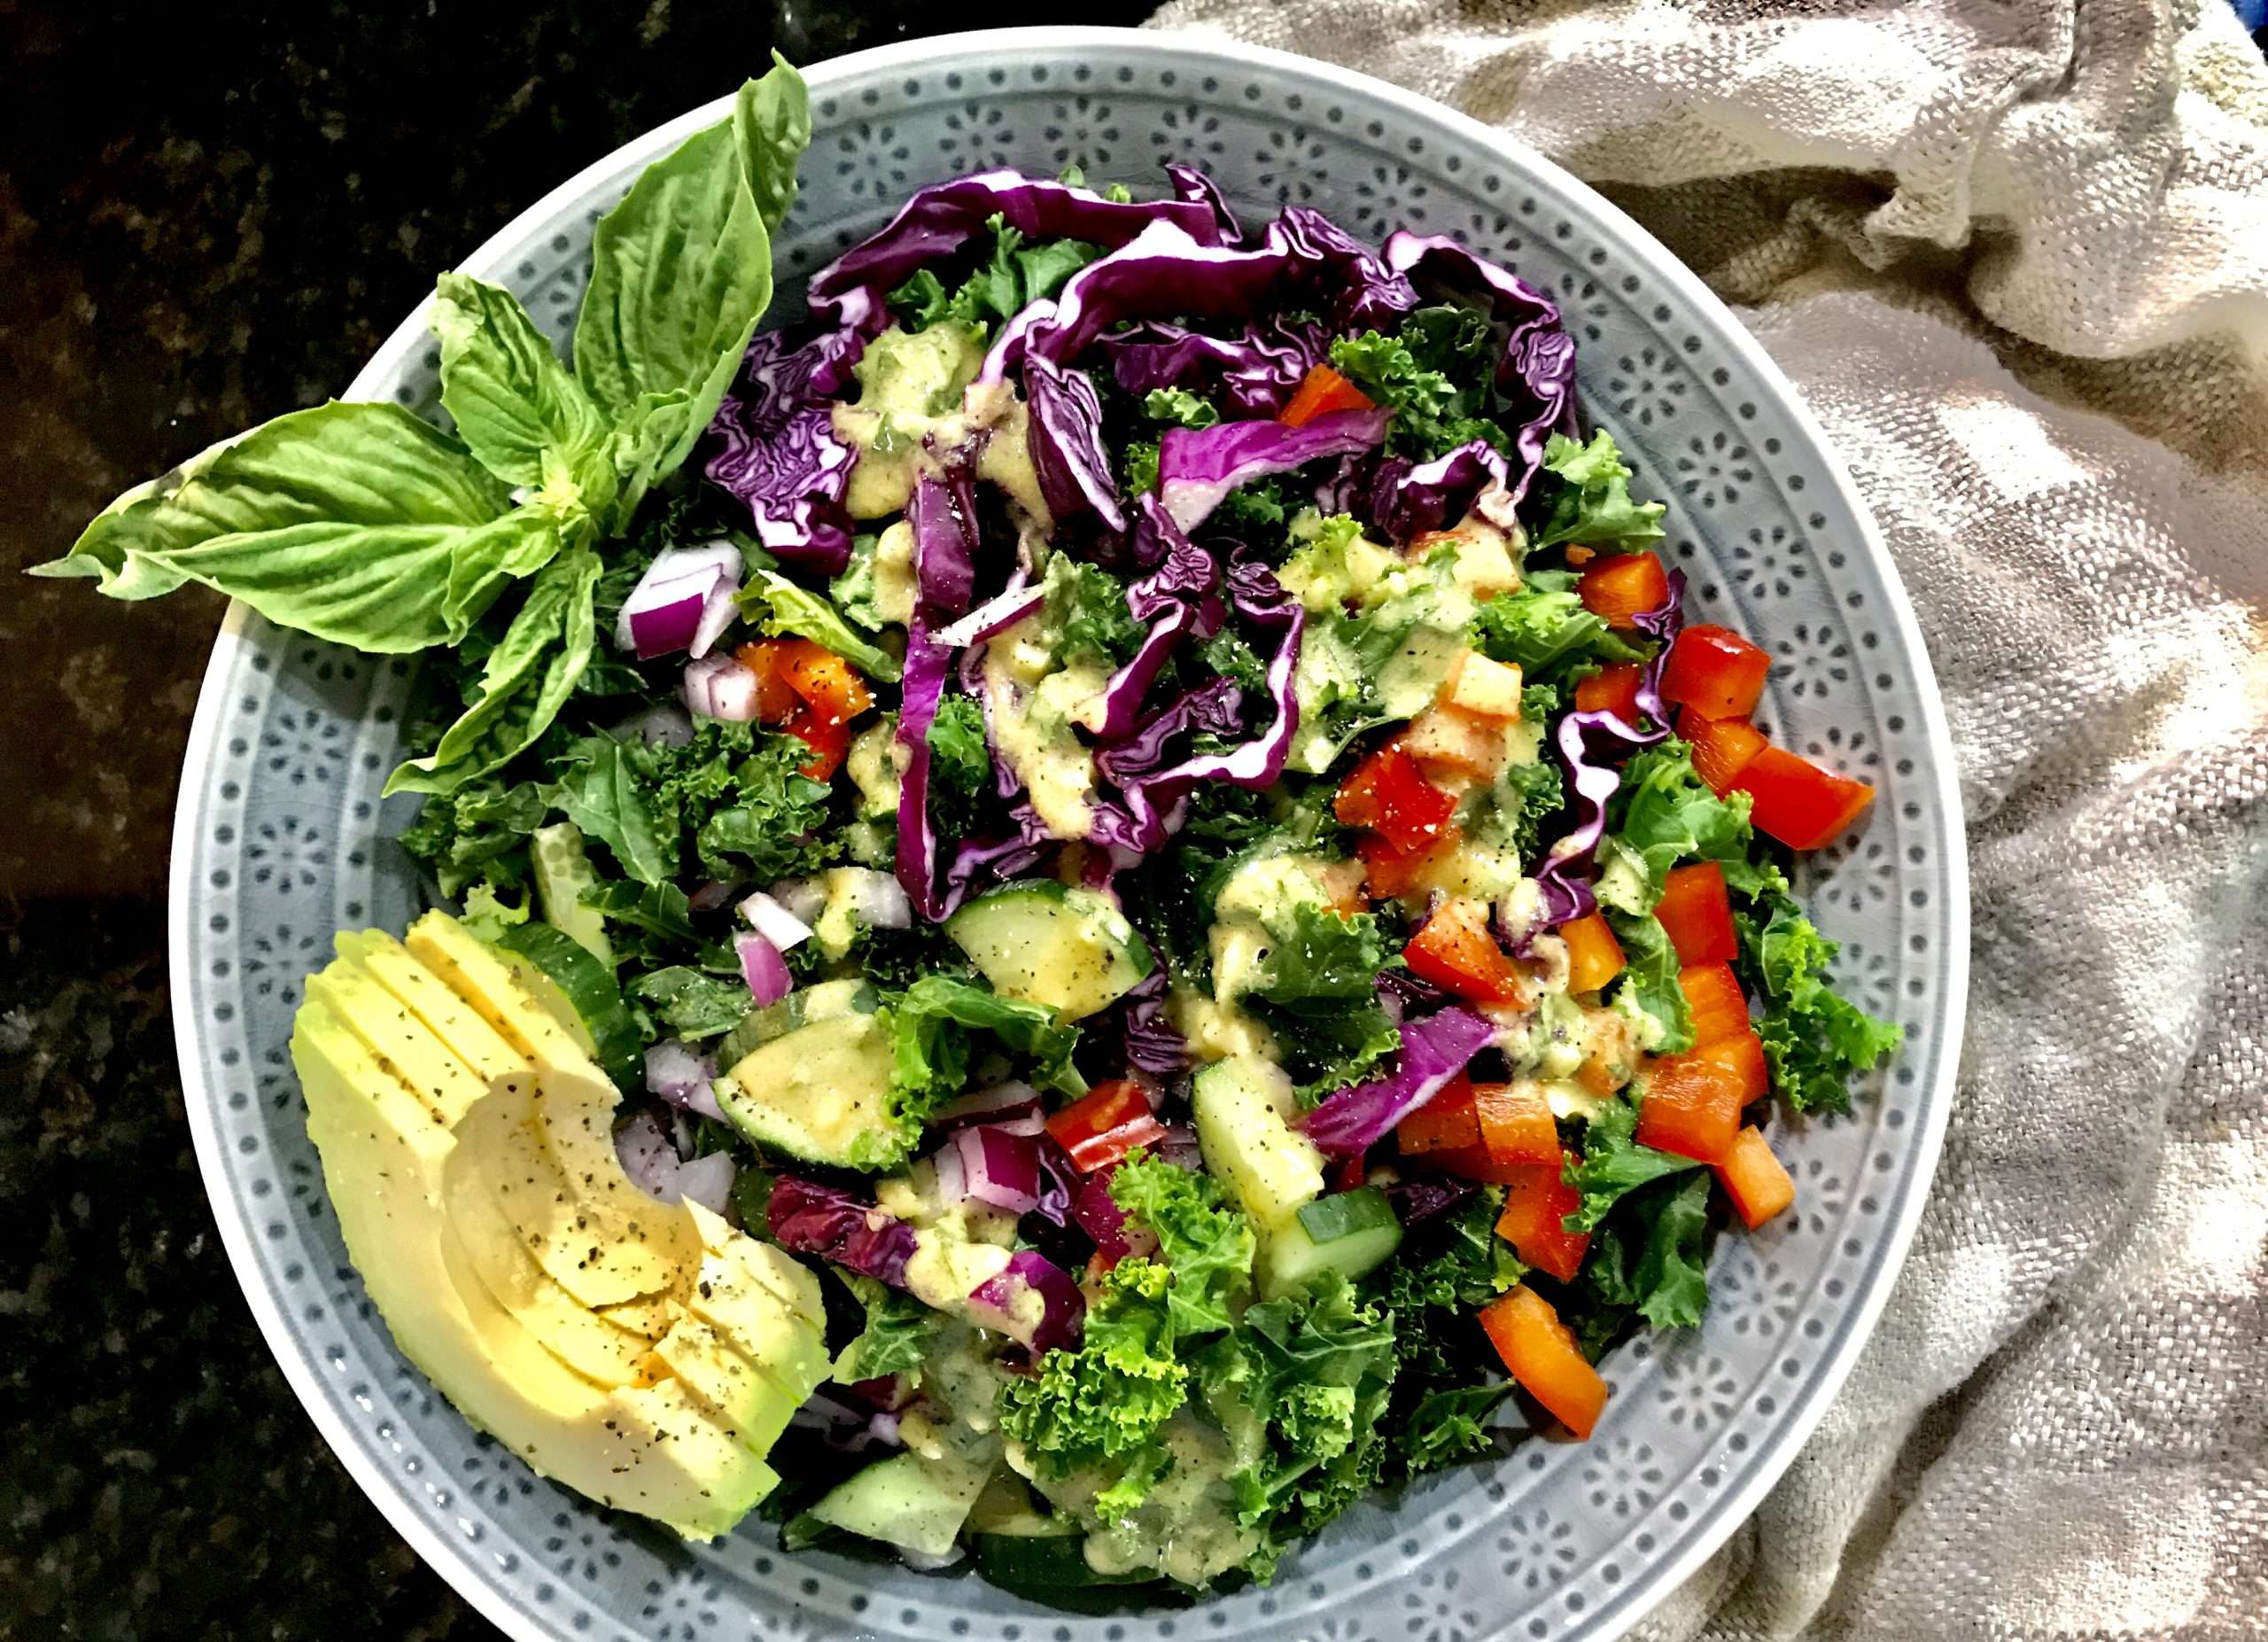 Steamed Kale and Summer Vegetable Salad with a Lemon